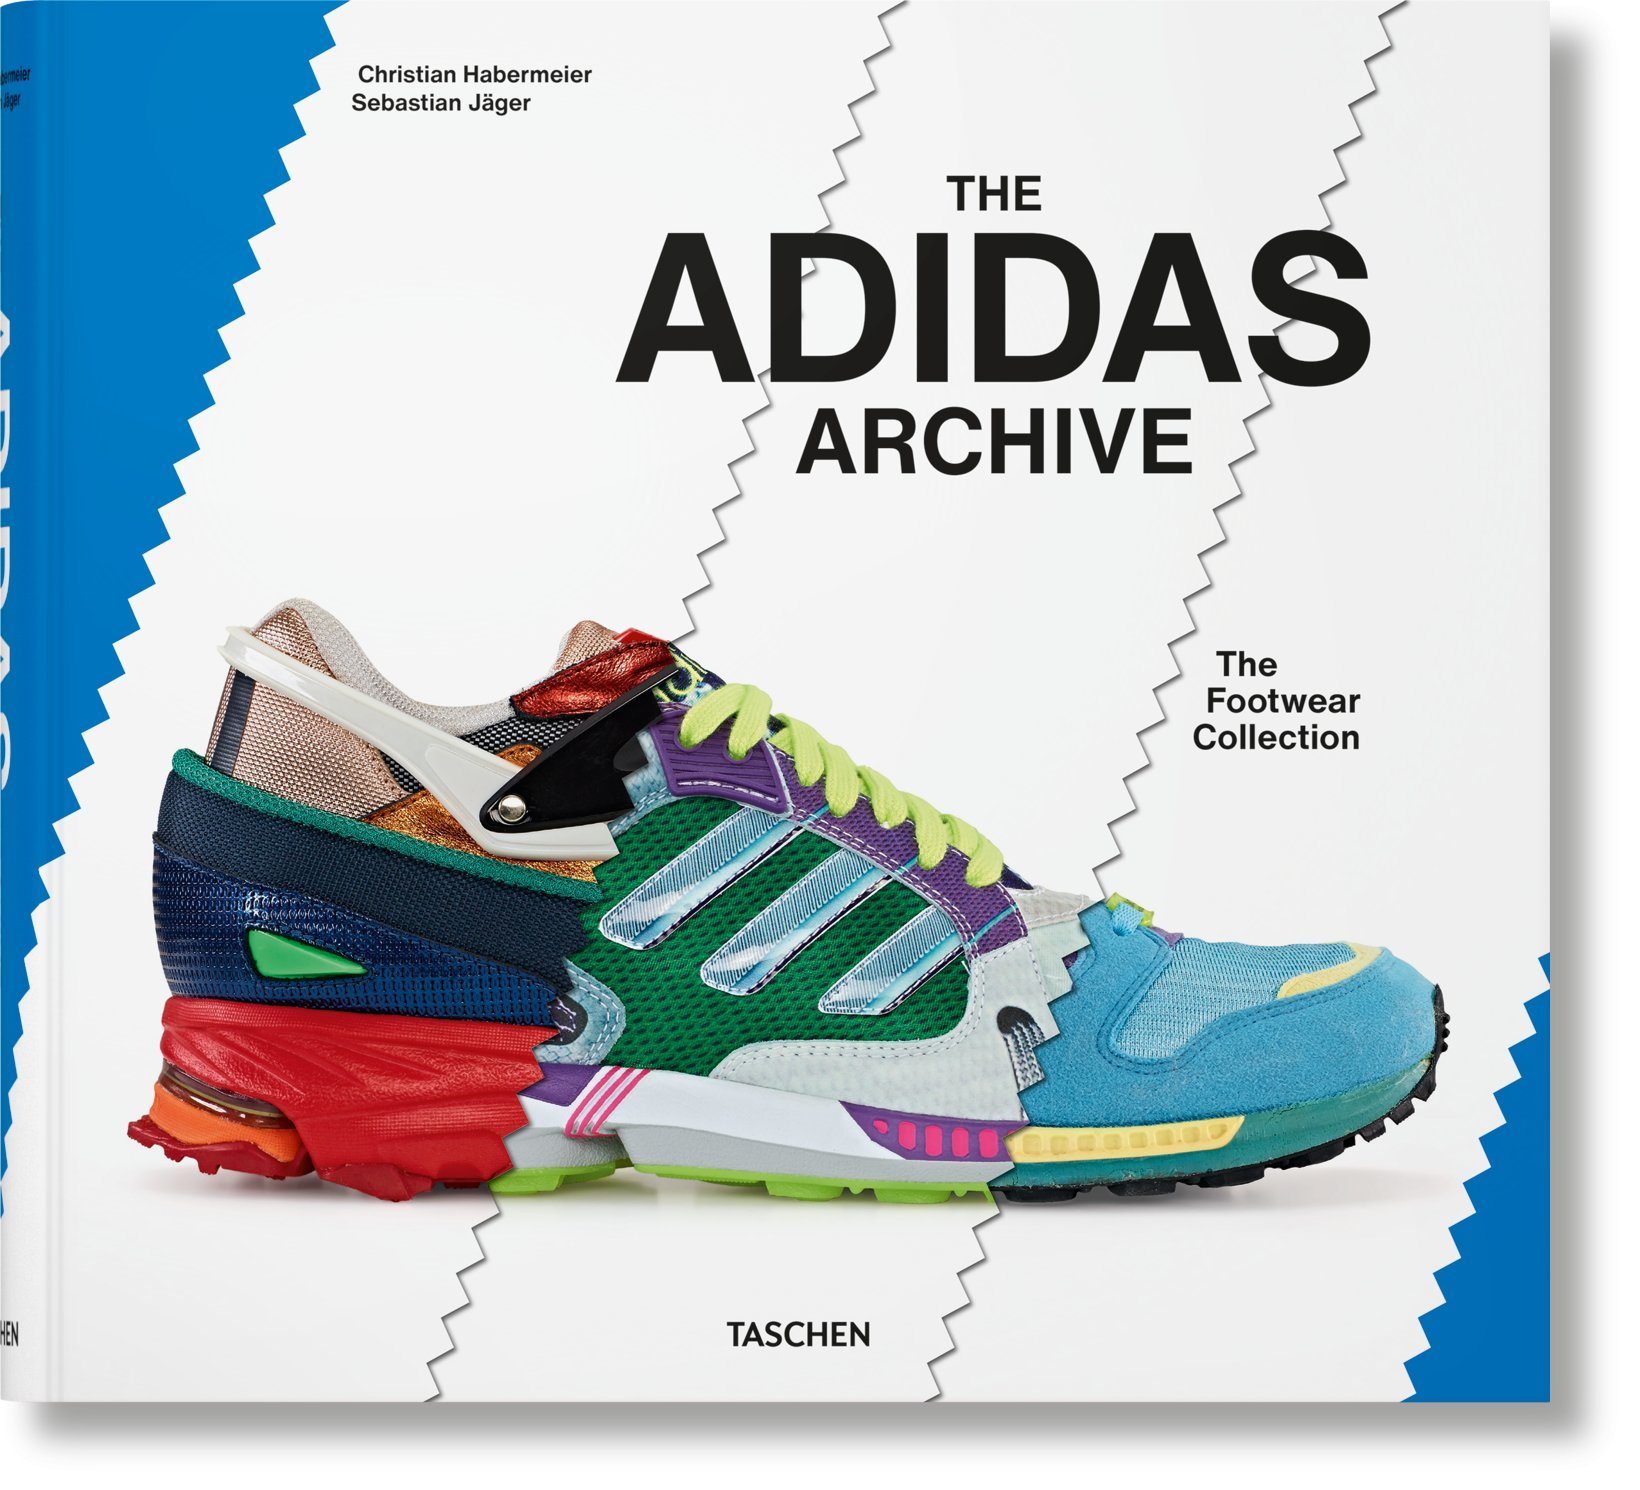 Taschen retrace l’histoire d’Adidas